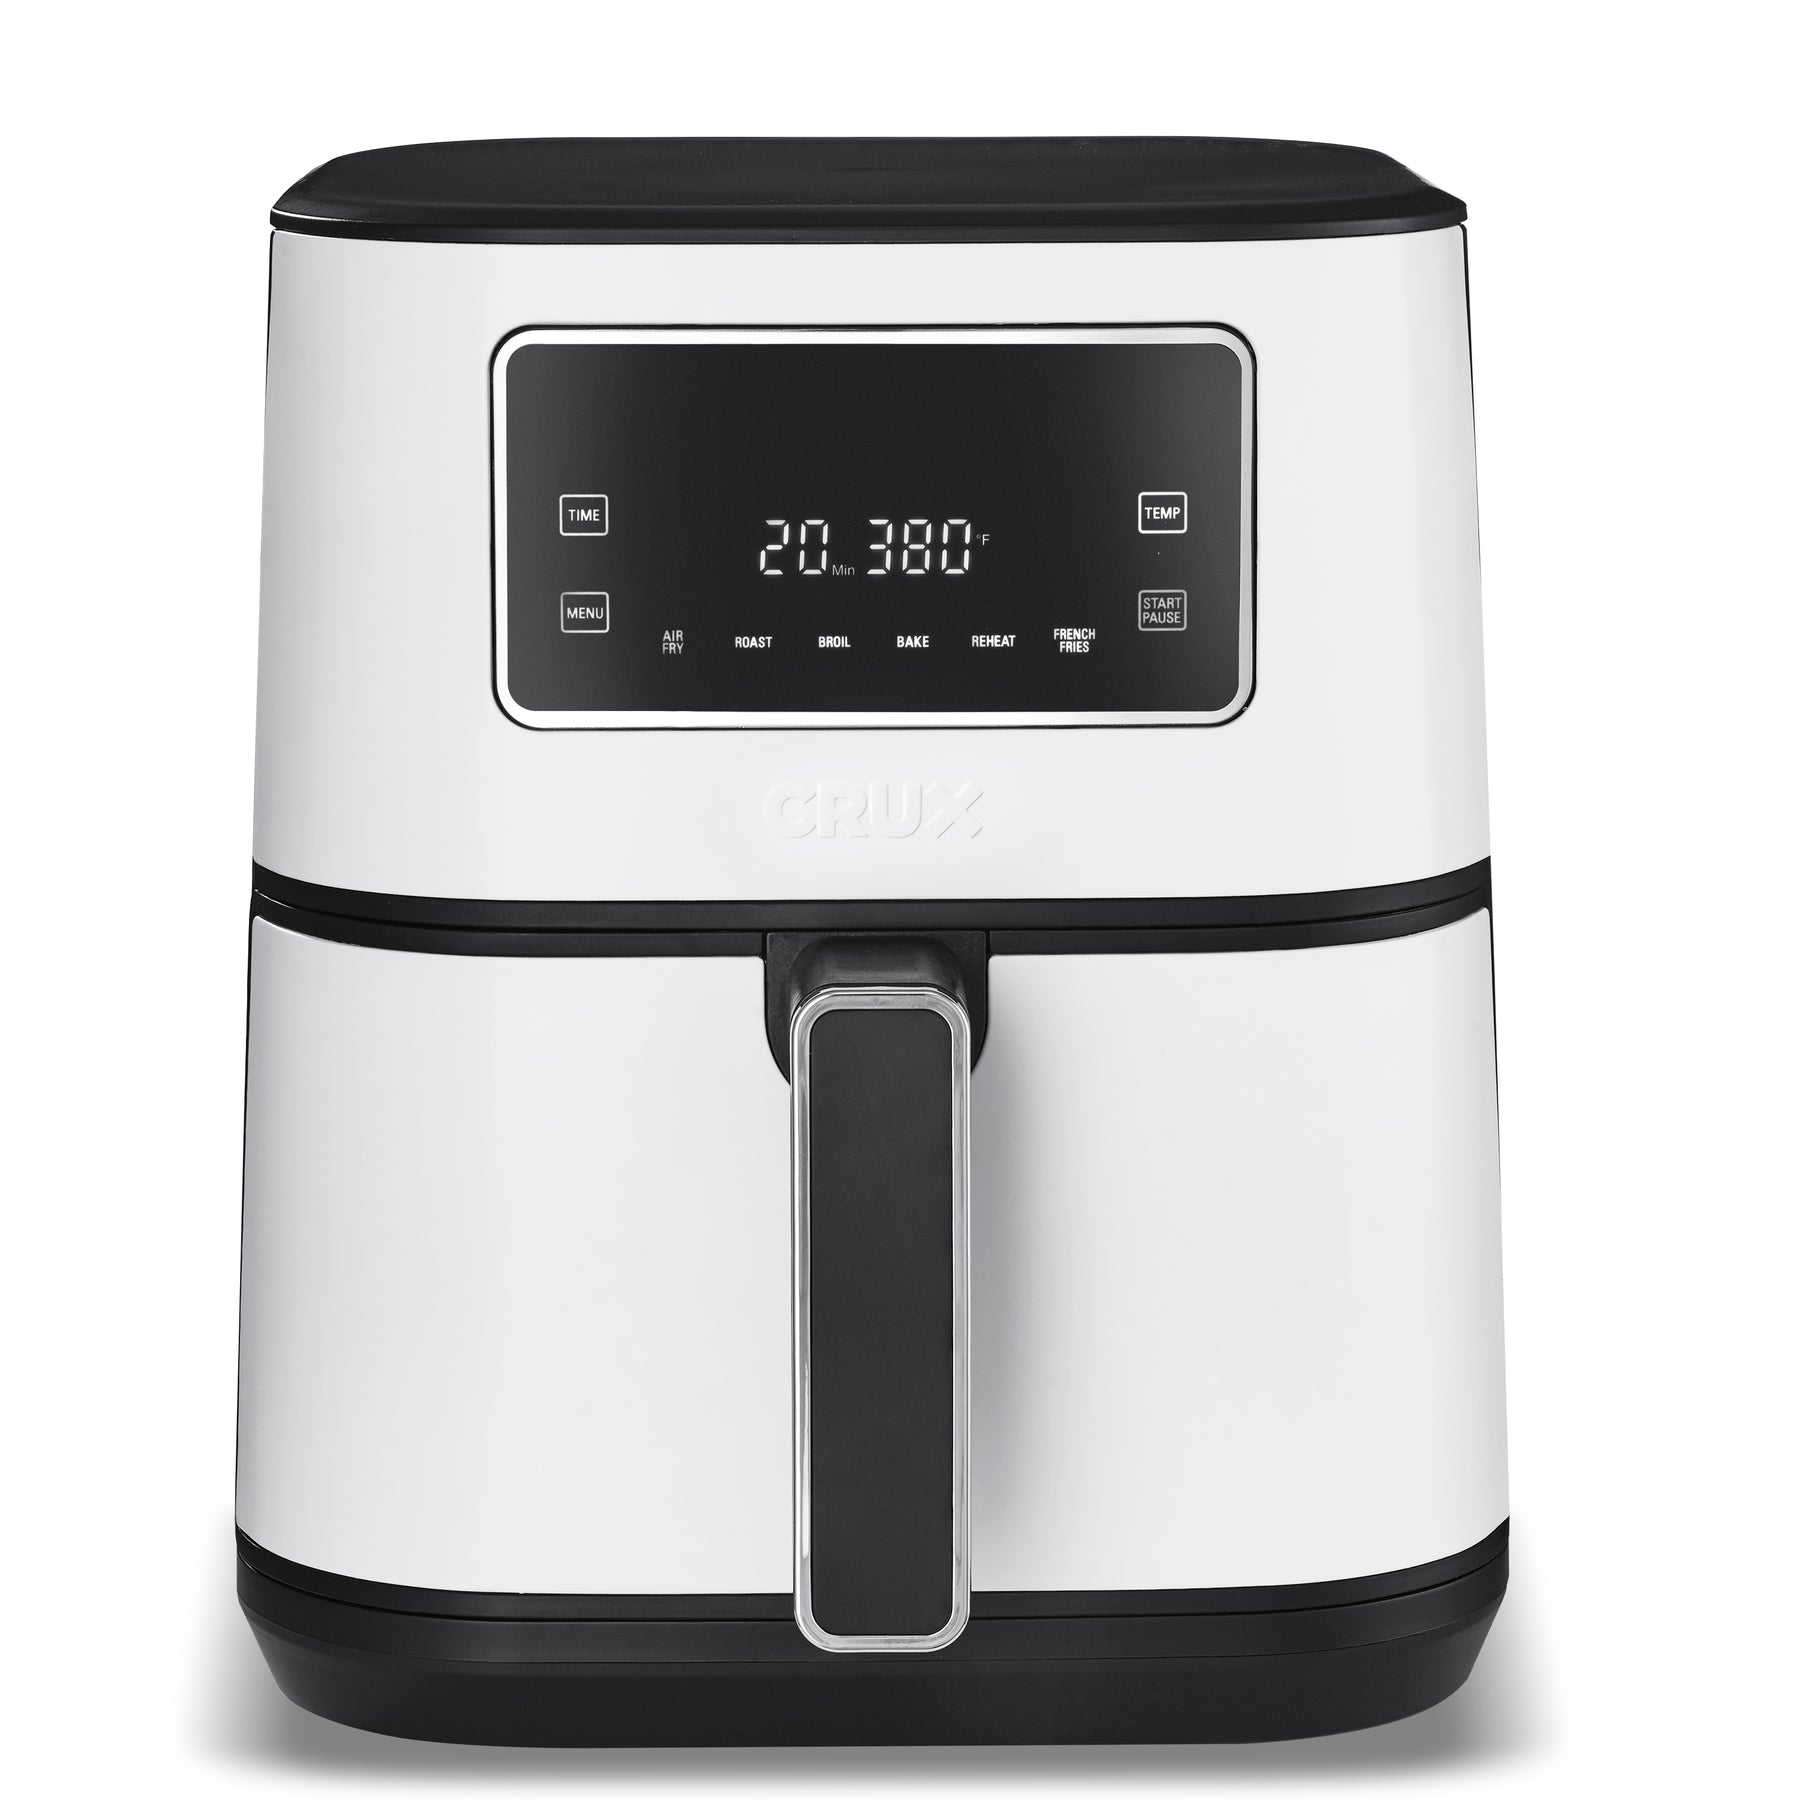 Crux 6 qt. Digital Air Fryer 1500 Watt - White